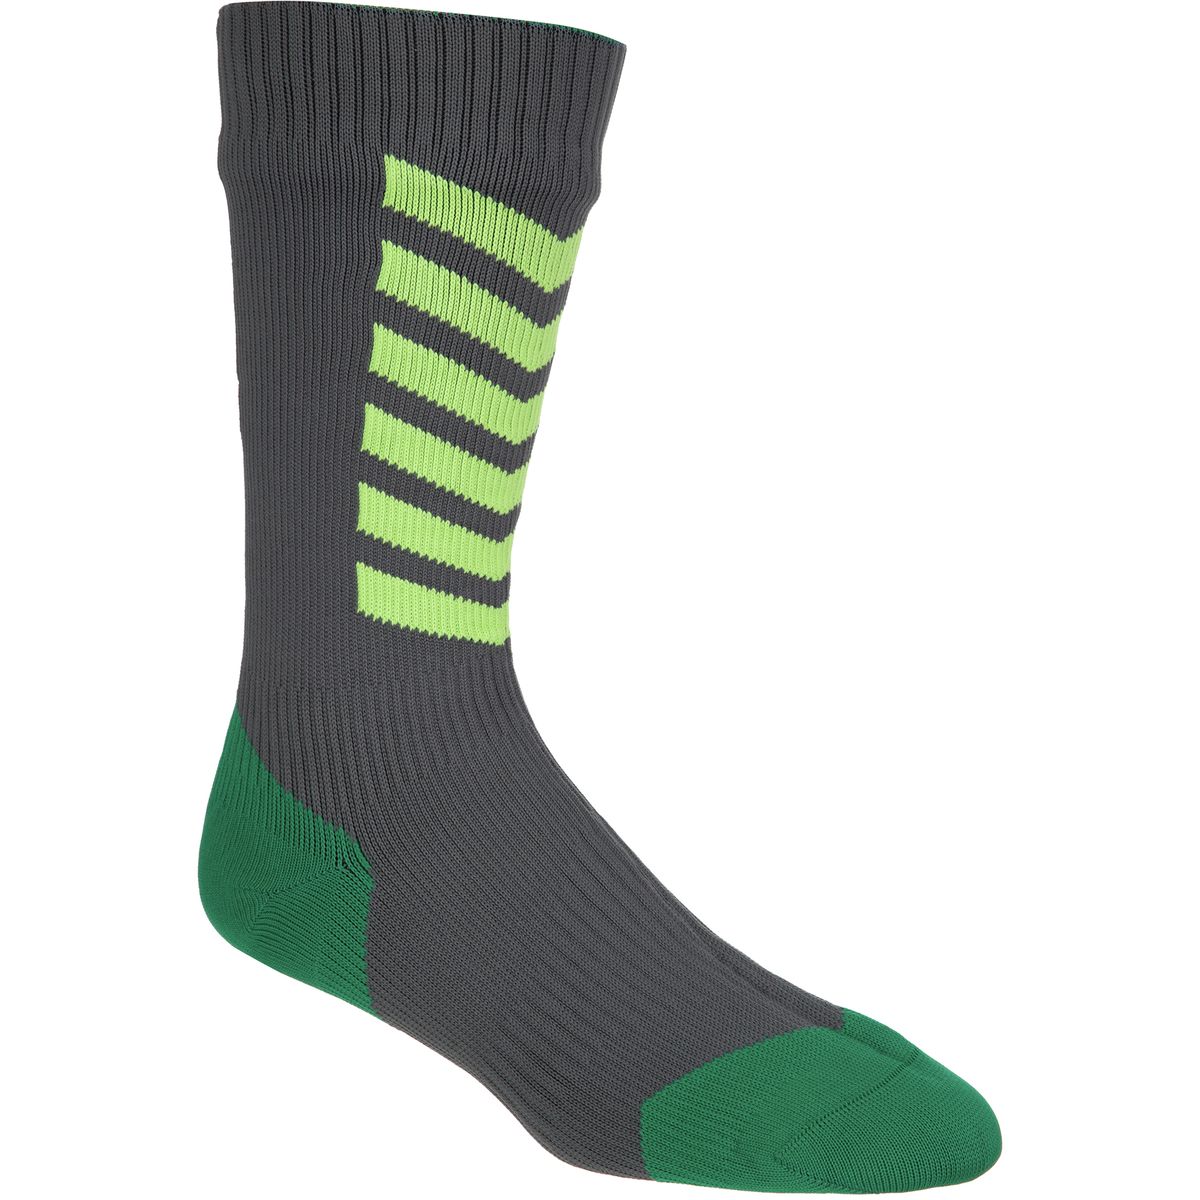 SealSkinz MTB Mid Sock with Hydrostop - Men's